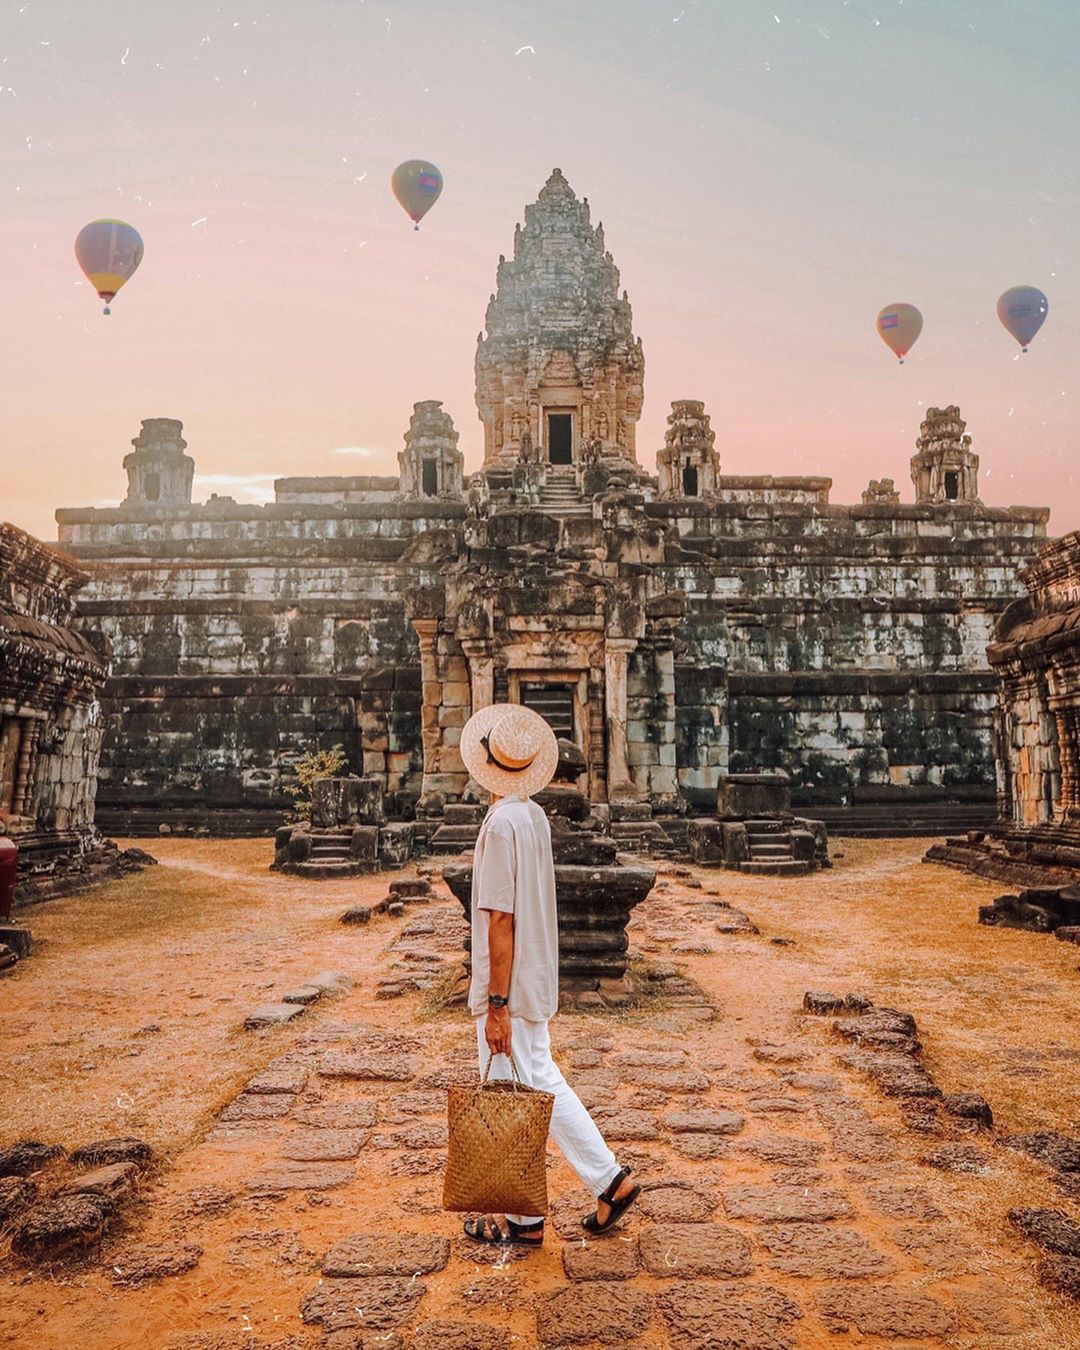 Cambodia Angkor Wat attraction reviews - Cambodia Angkor Wat tickets - Cambodia  Angkor Wat discounts - Cambodia Angkor Wat transportation, address, opening  hours - attractions, hotels, and food near Cambodia Angkor Wat - Trip.com